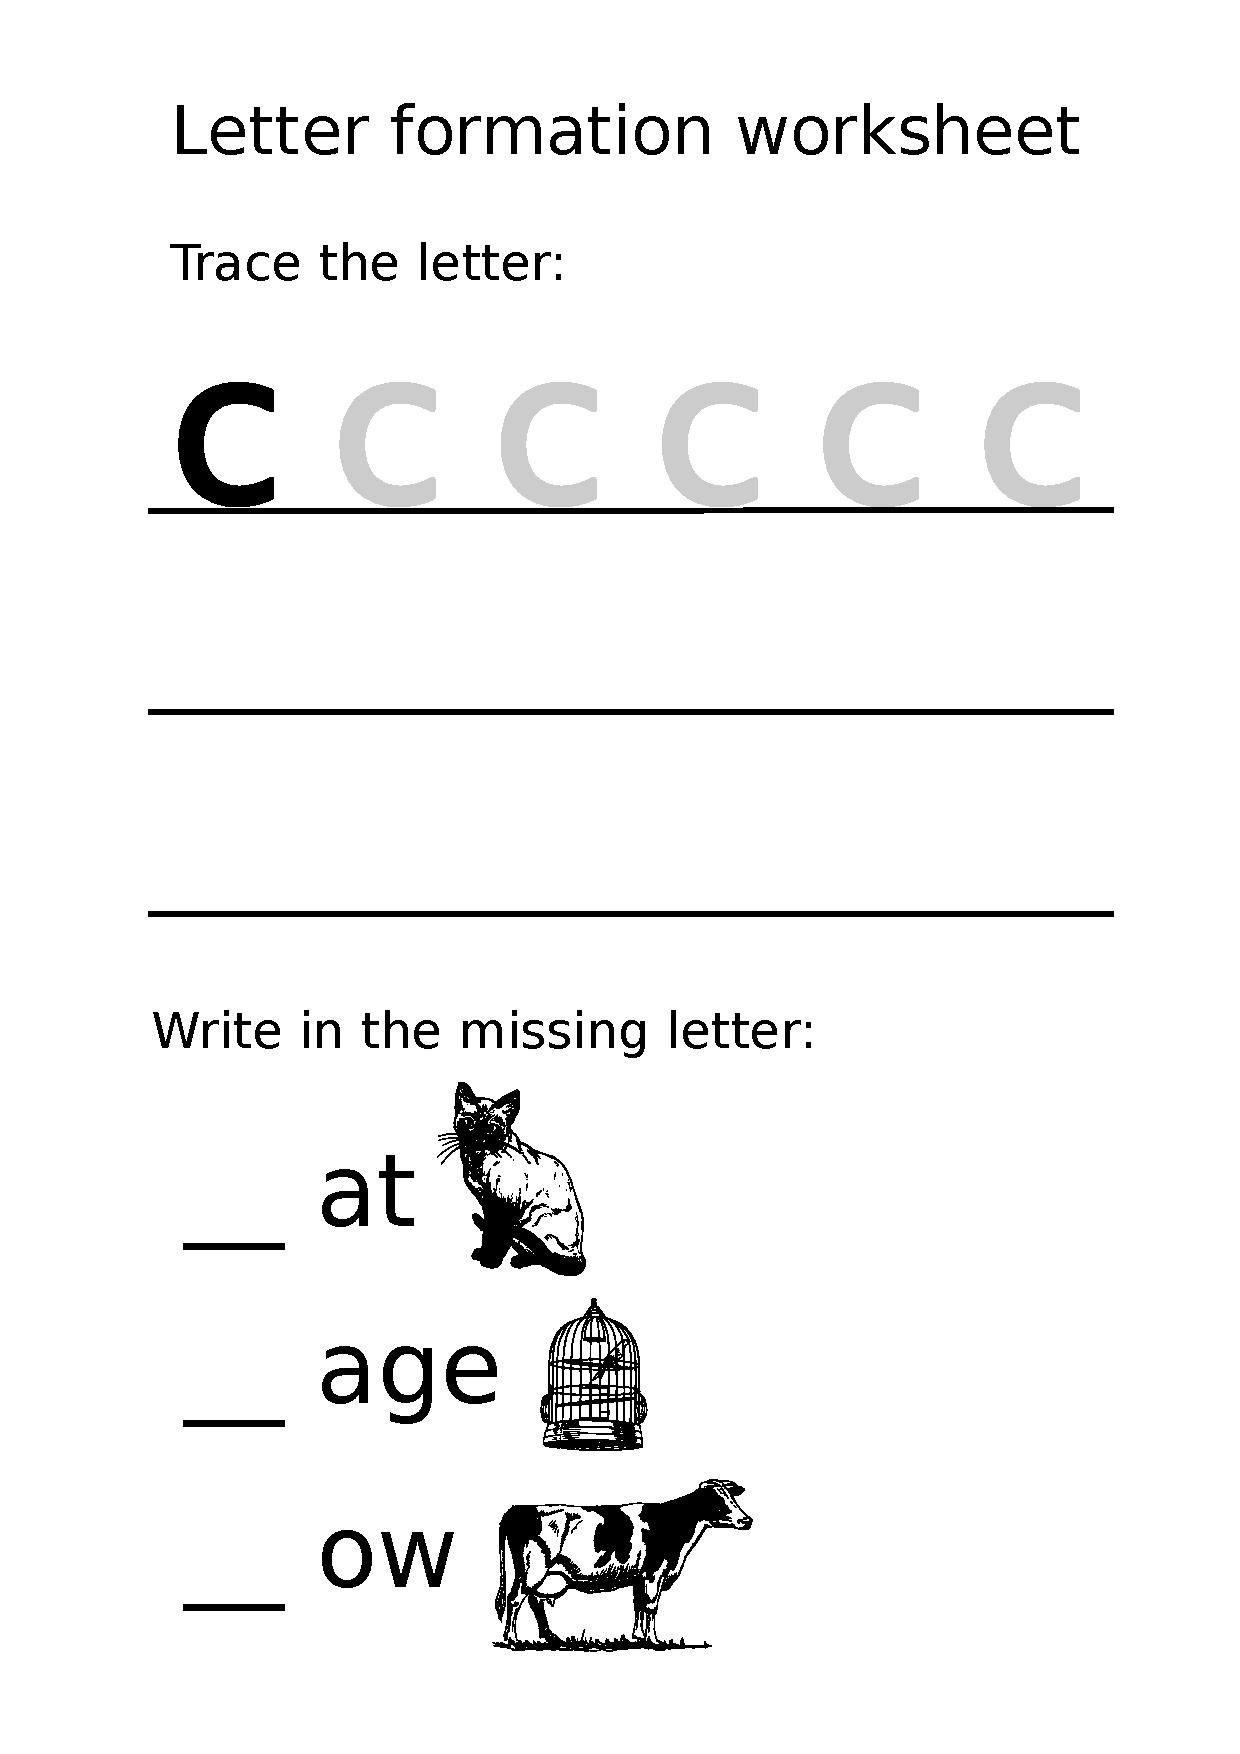 File:letter Formation Worksheet Lowercase C.pdf - Wikimedia